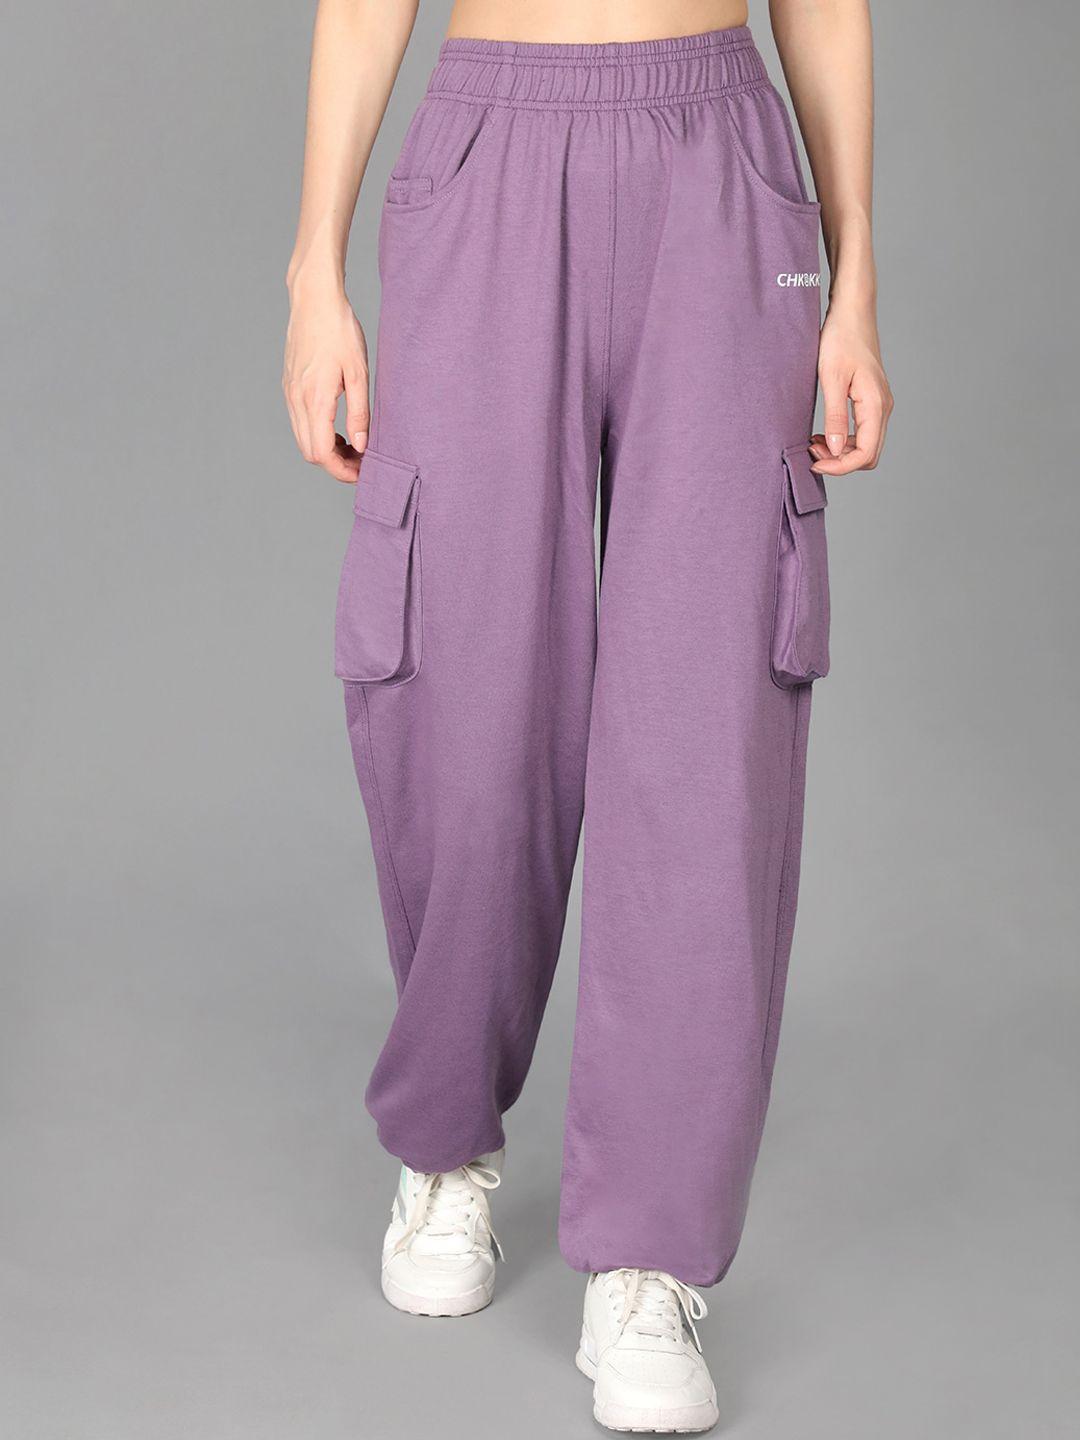 chkokko women purple solid pure cotton joggers track pants